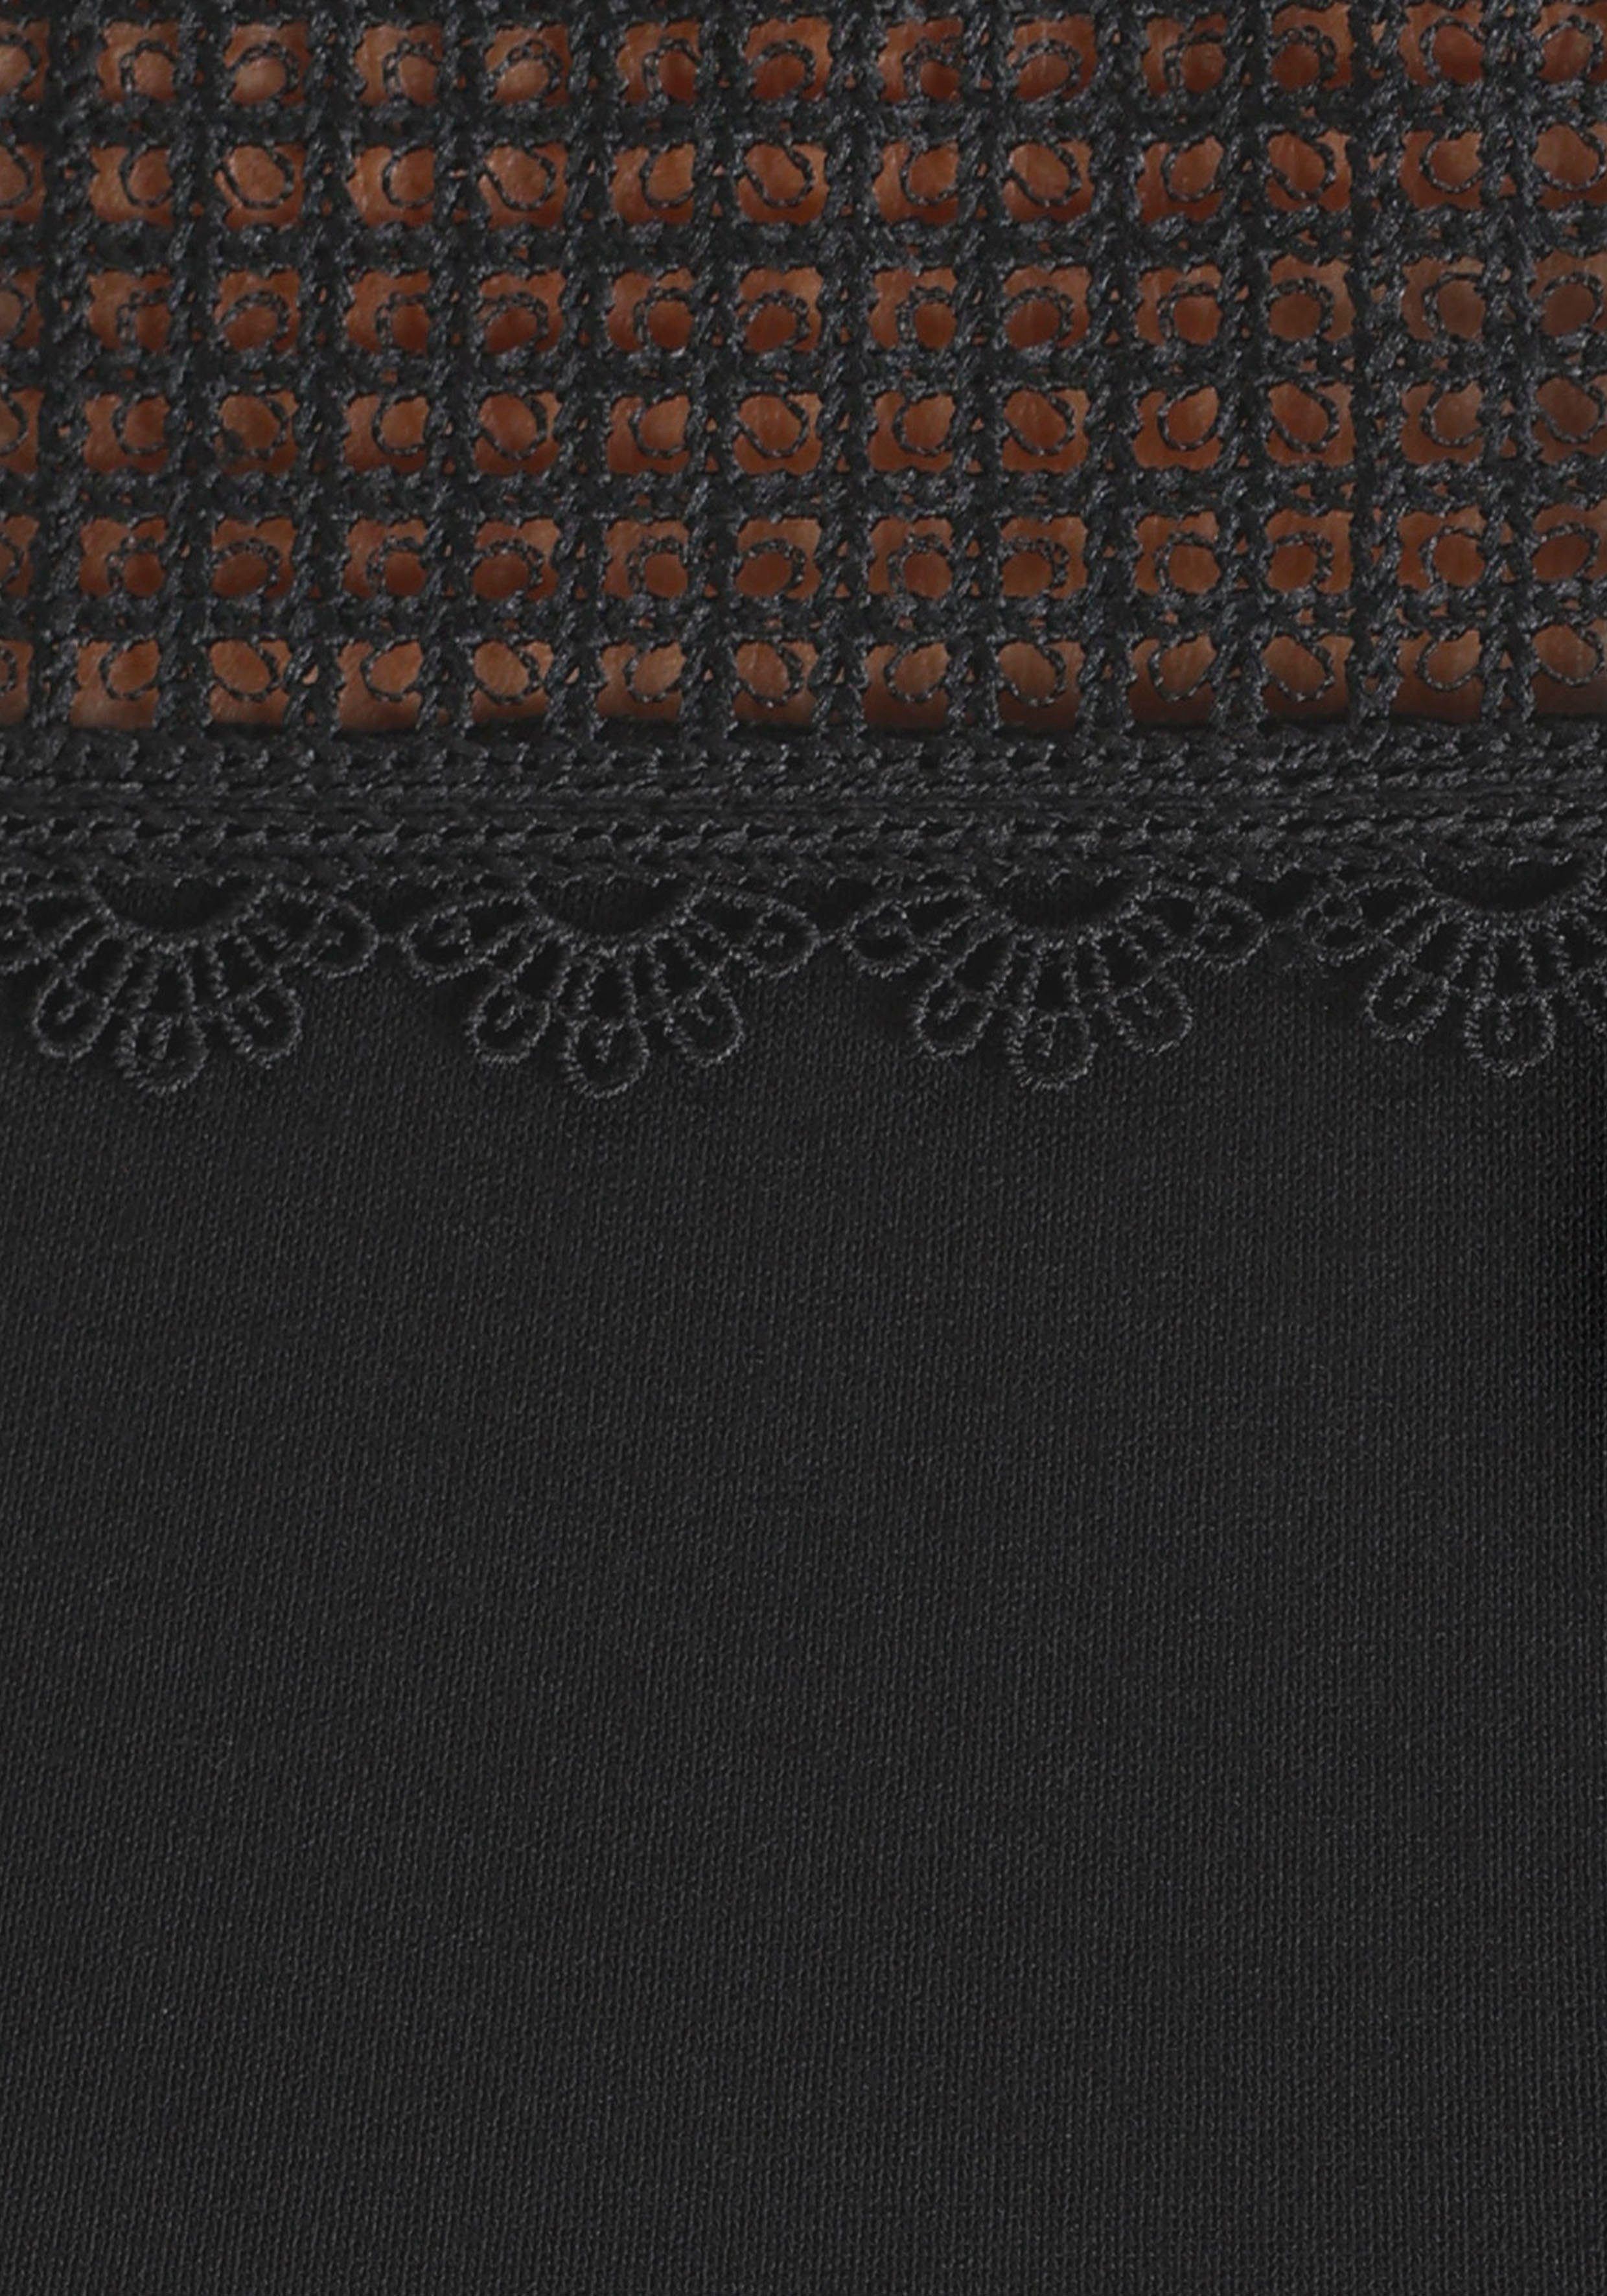 mit Netzshirt Crochet-Einsatz Melrose